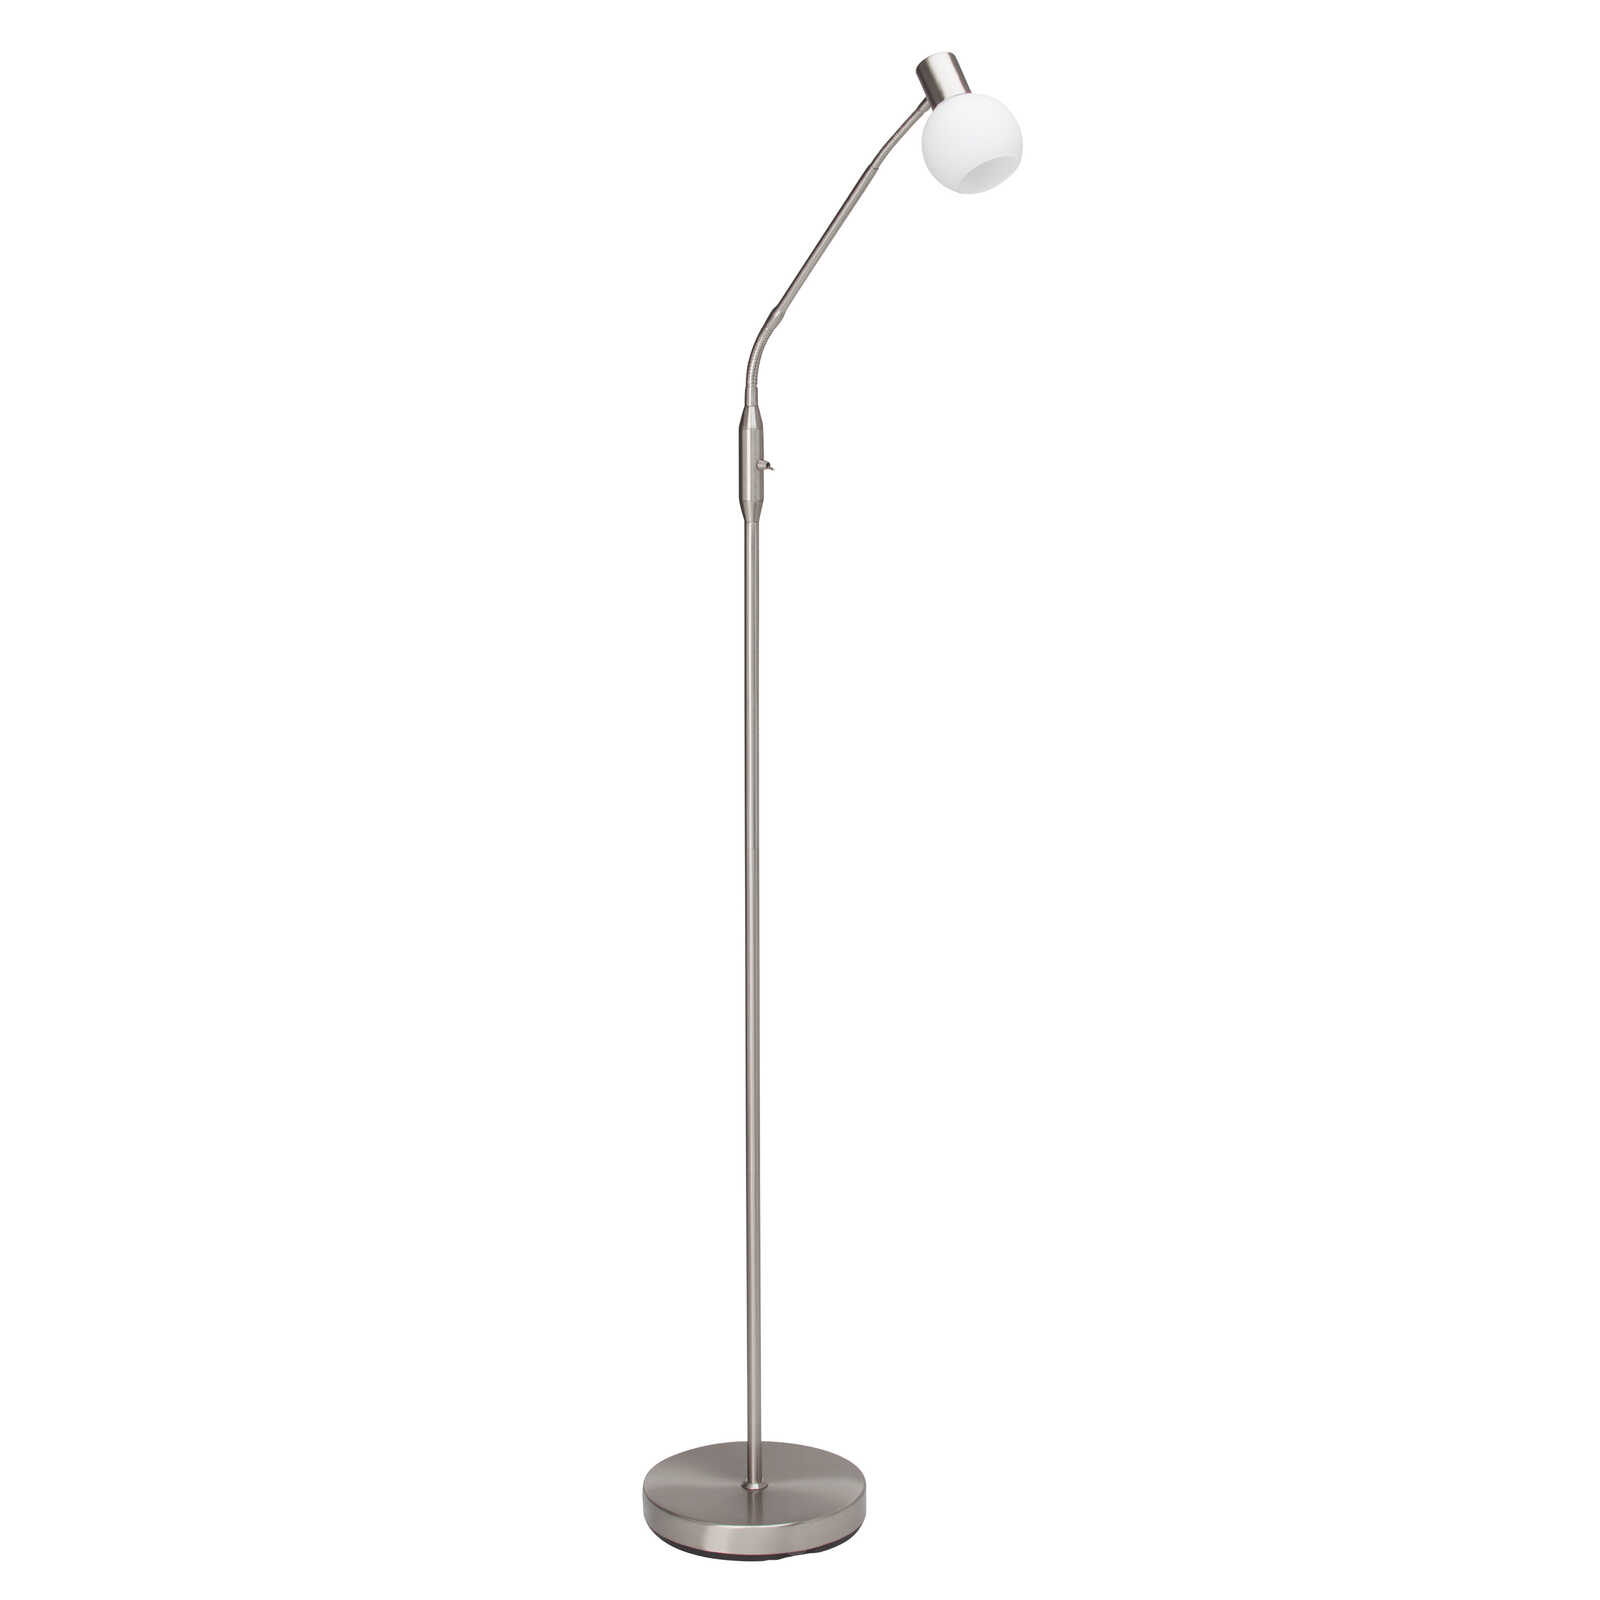             Glazen vloerlamp - Malou 1 - Metallic
        